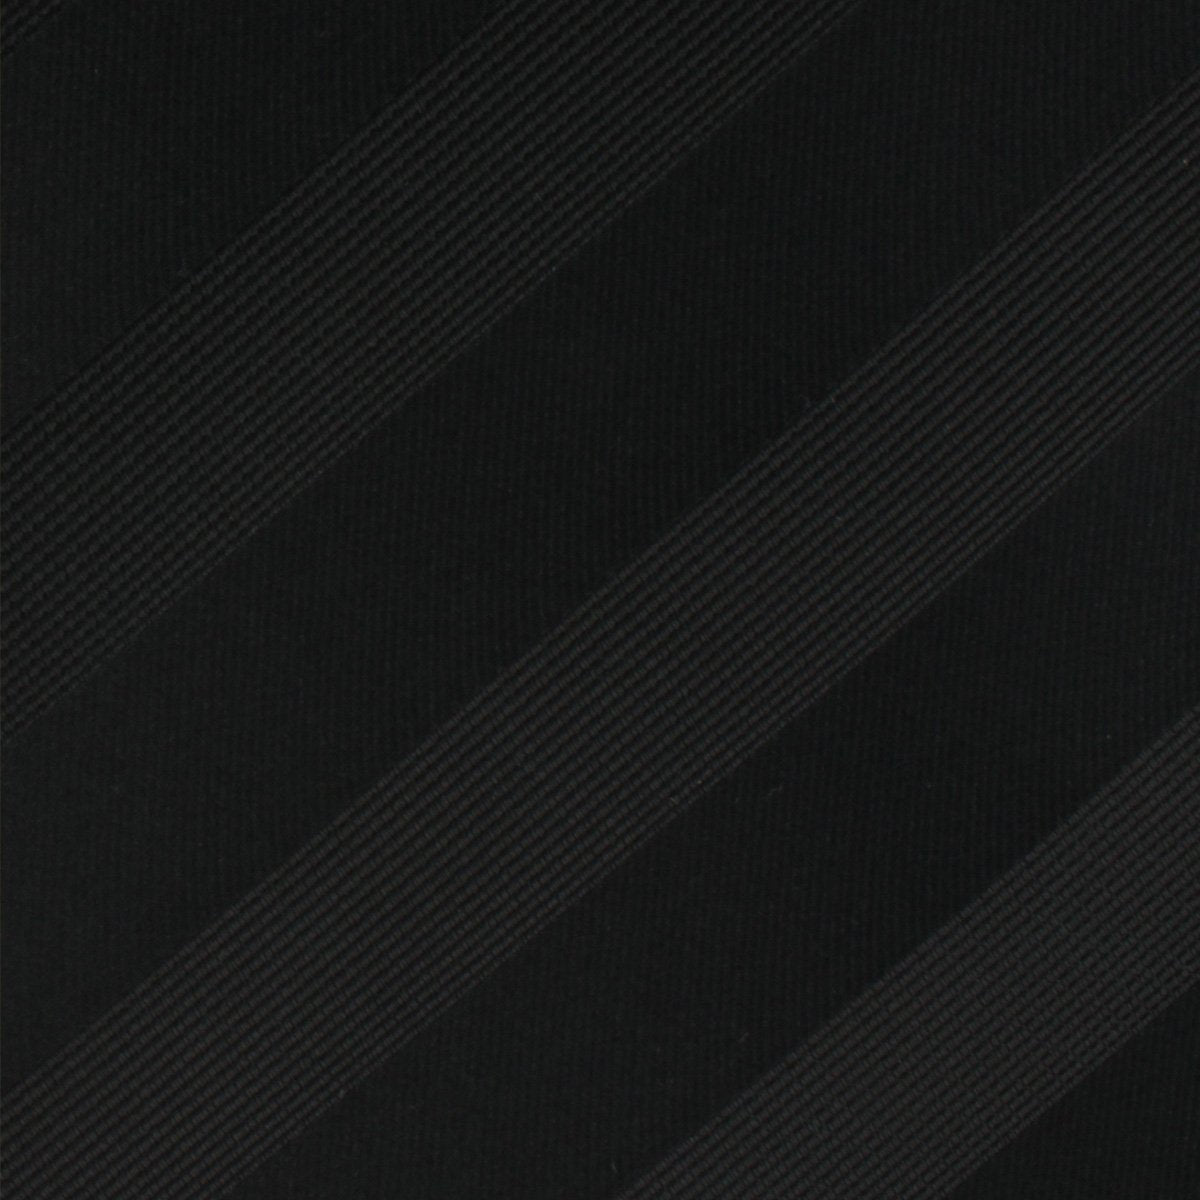 Sinatra Black Striped Skinny Tie Fabric